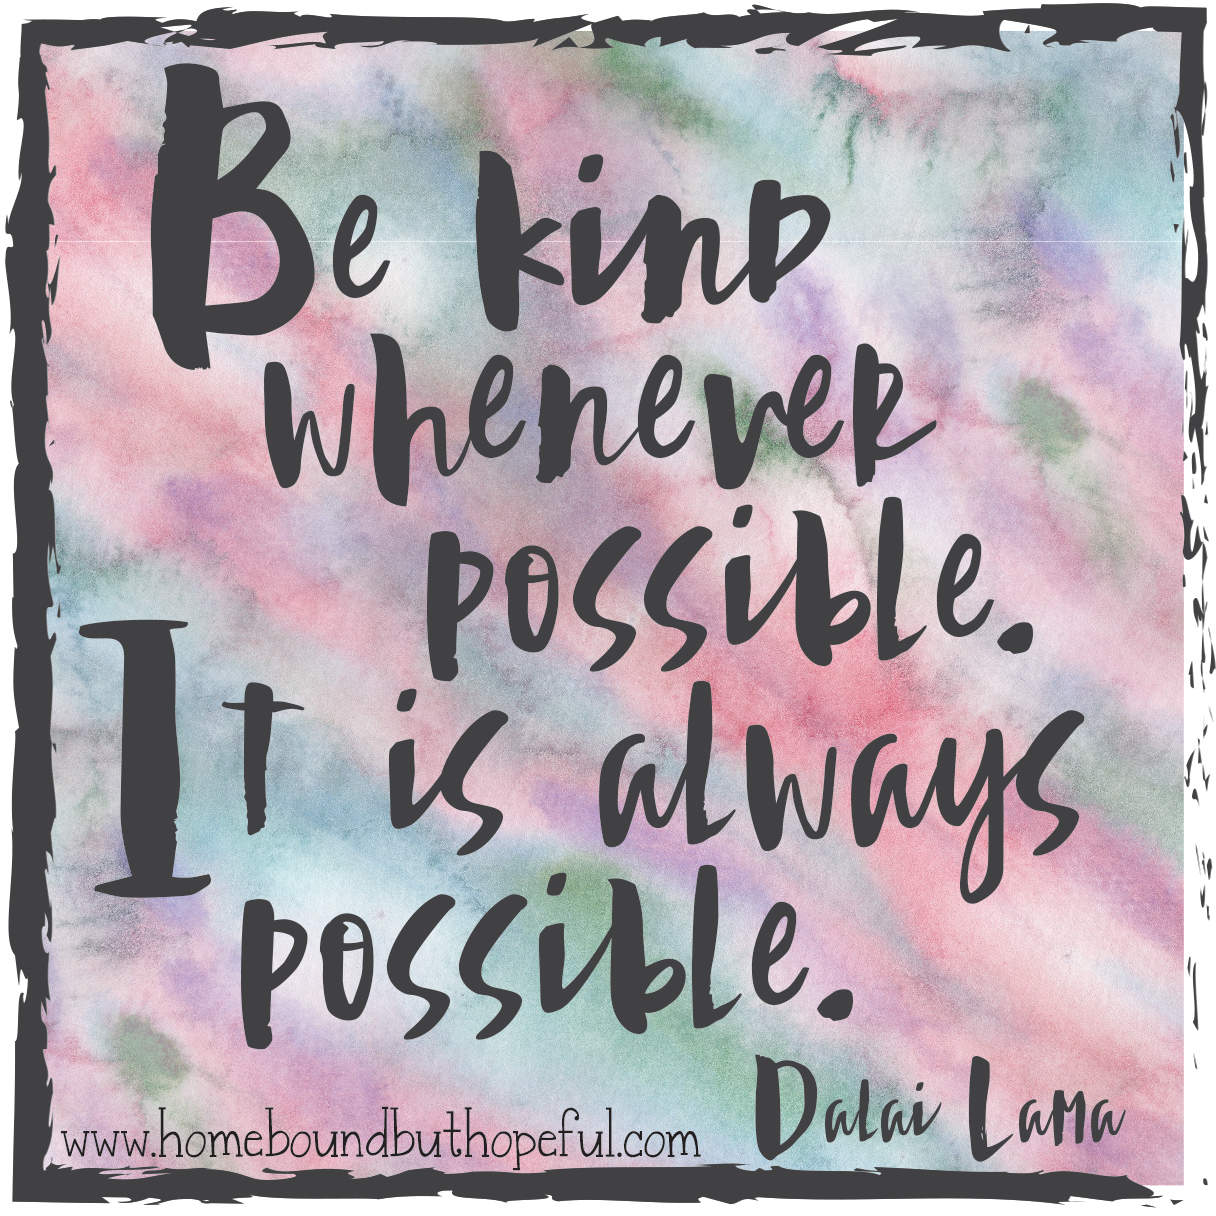 dalai lama kindness quote